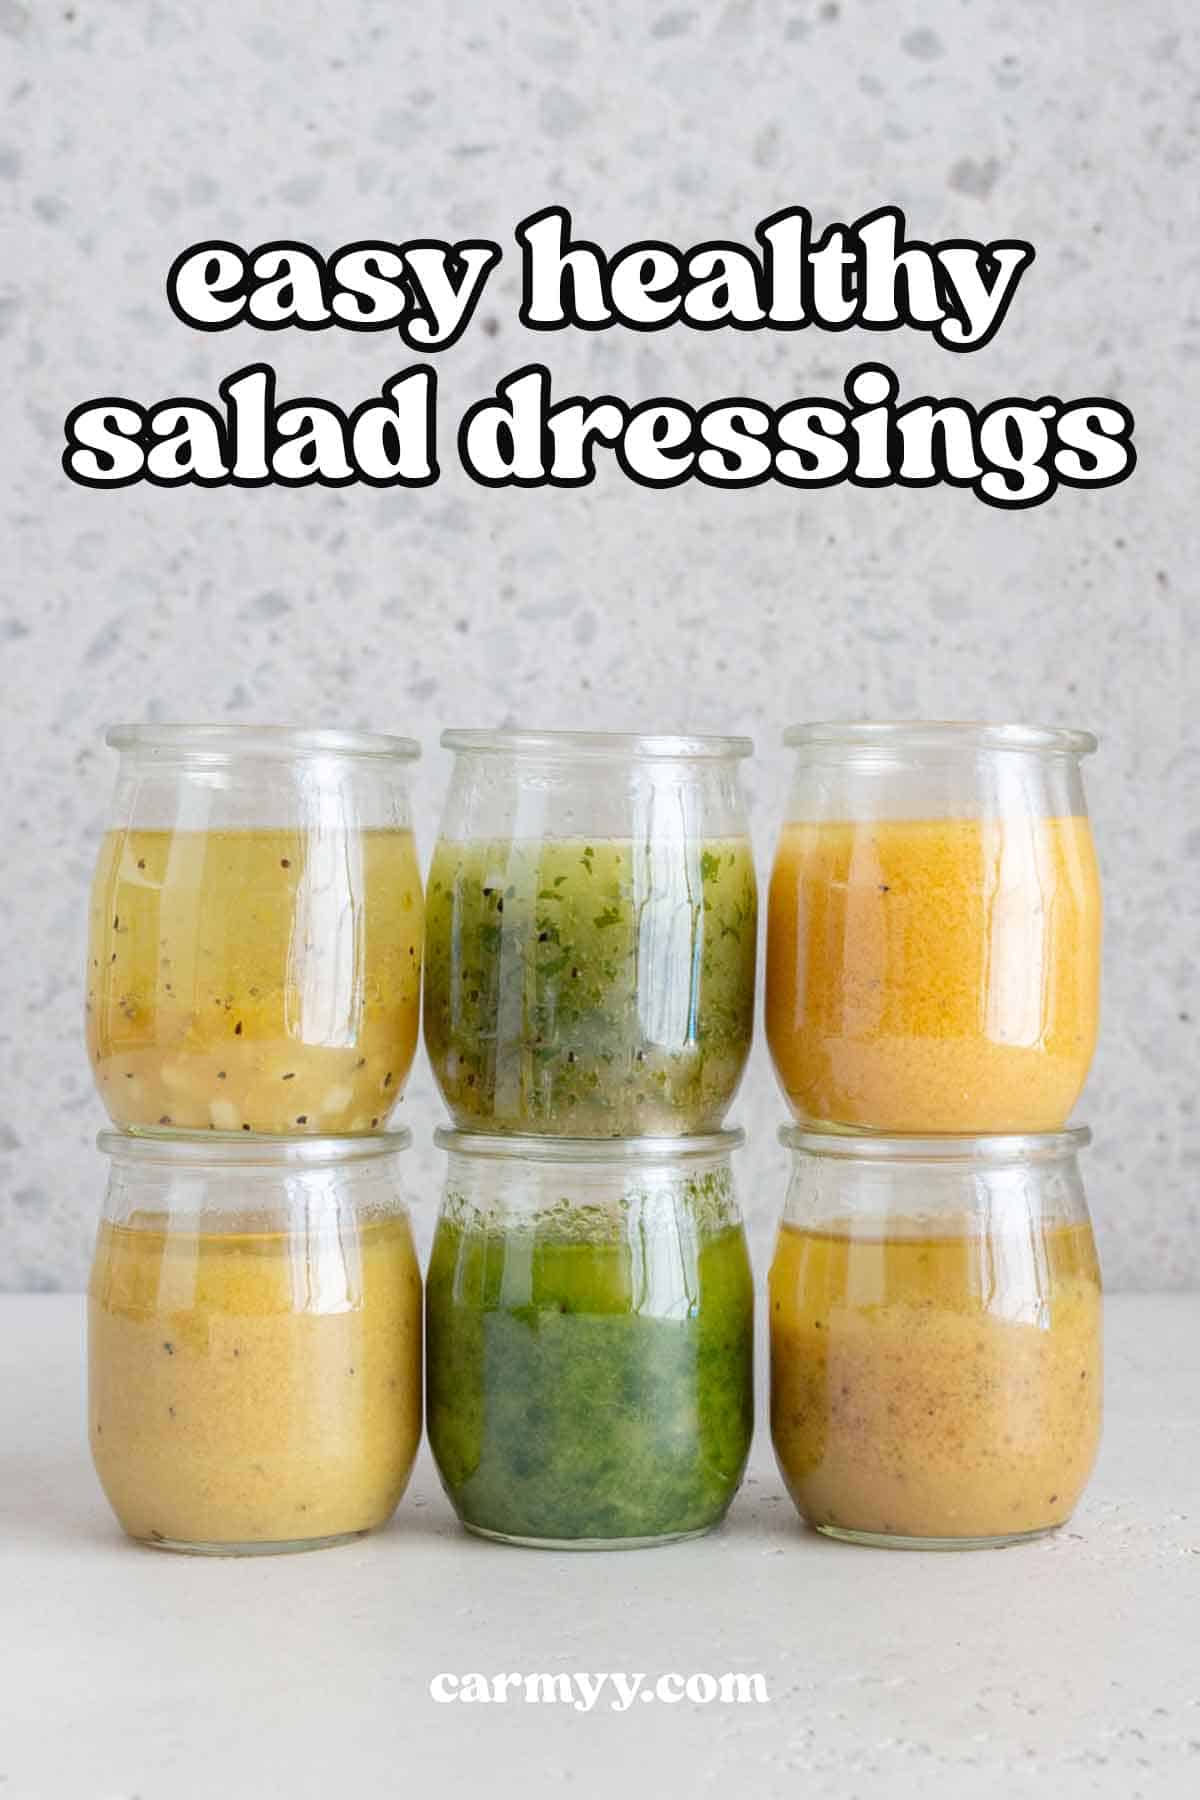 Two rows of three jars of healthy salad dressings.